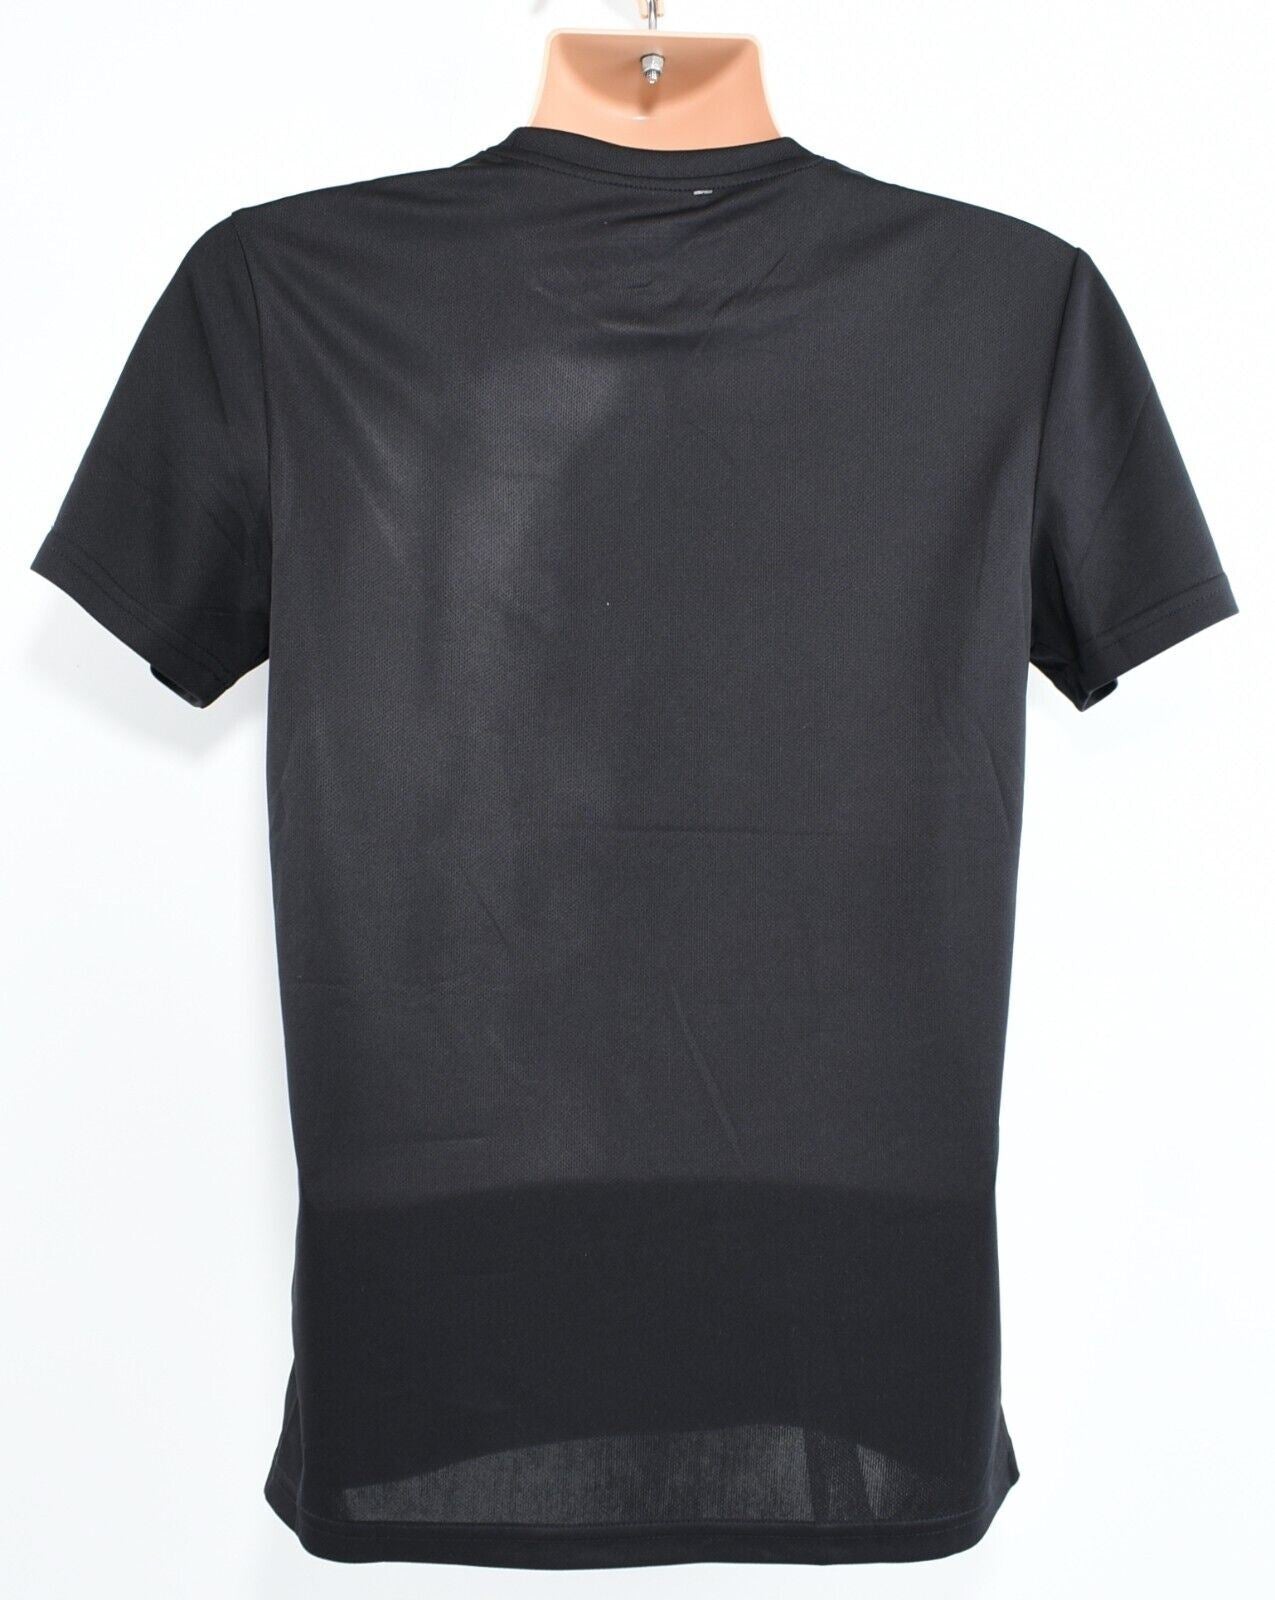 Viewsport IRONMAN Men's Training Tee, Workout Gym T-shirt, Black, size S